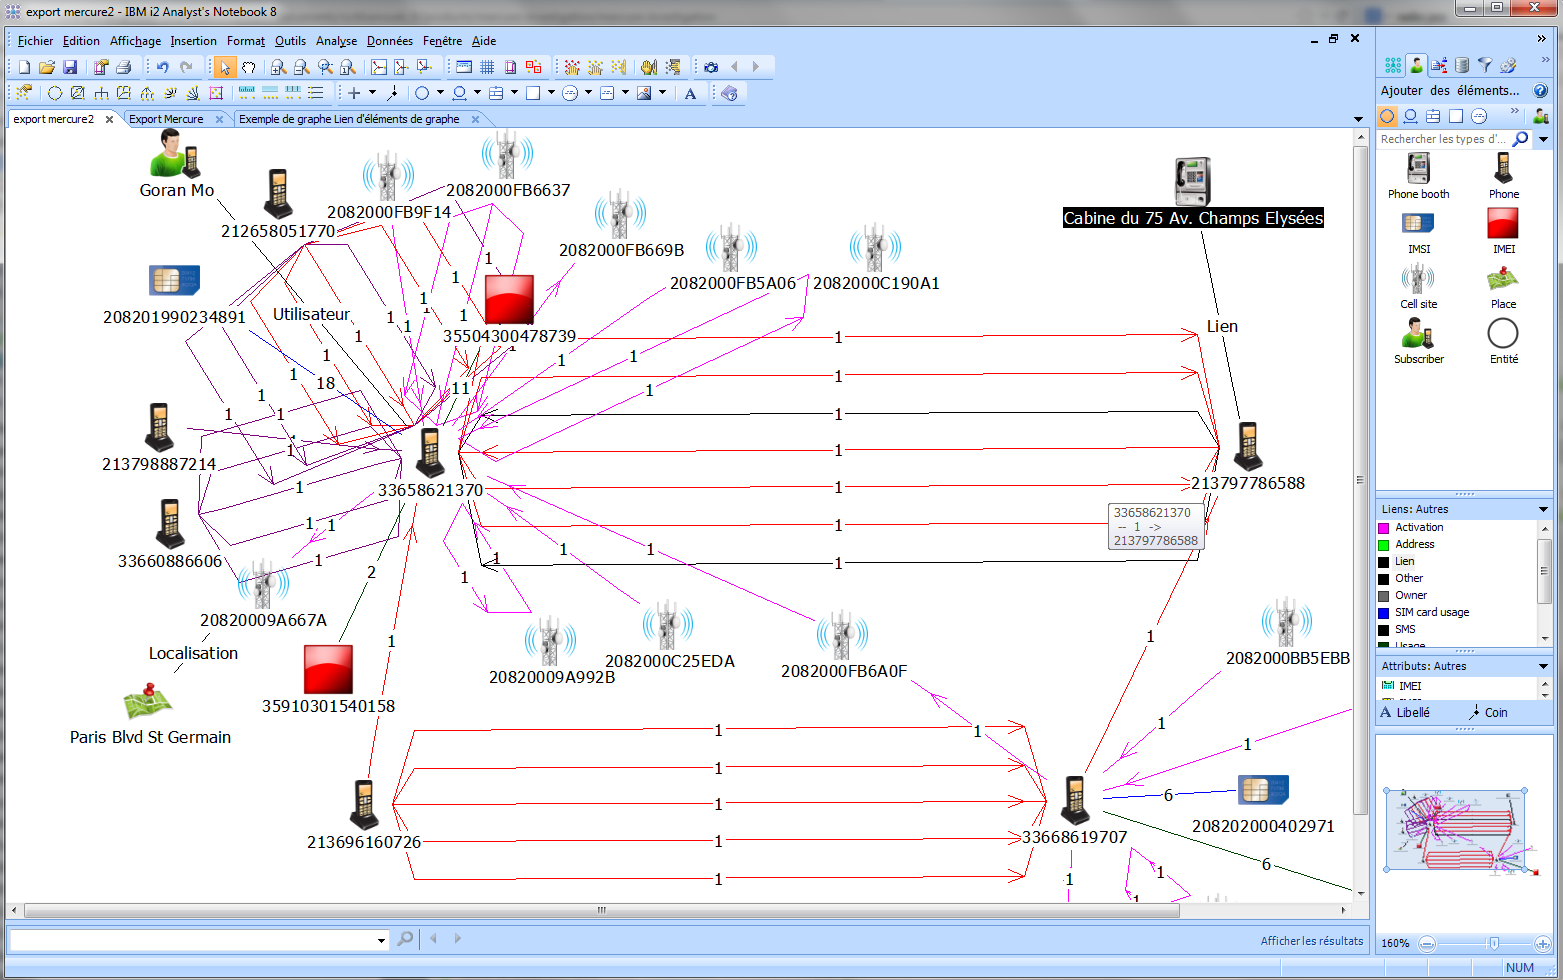 Example of  Mercure data exploitation using IBM i2 Analyst's Notebook